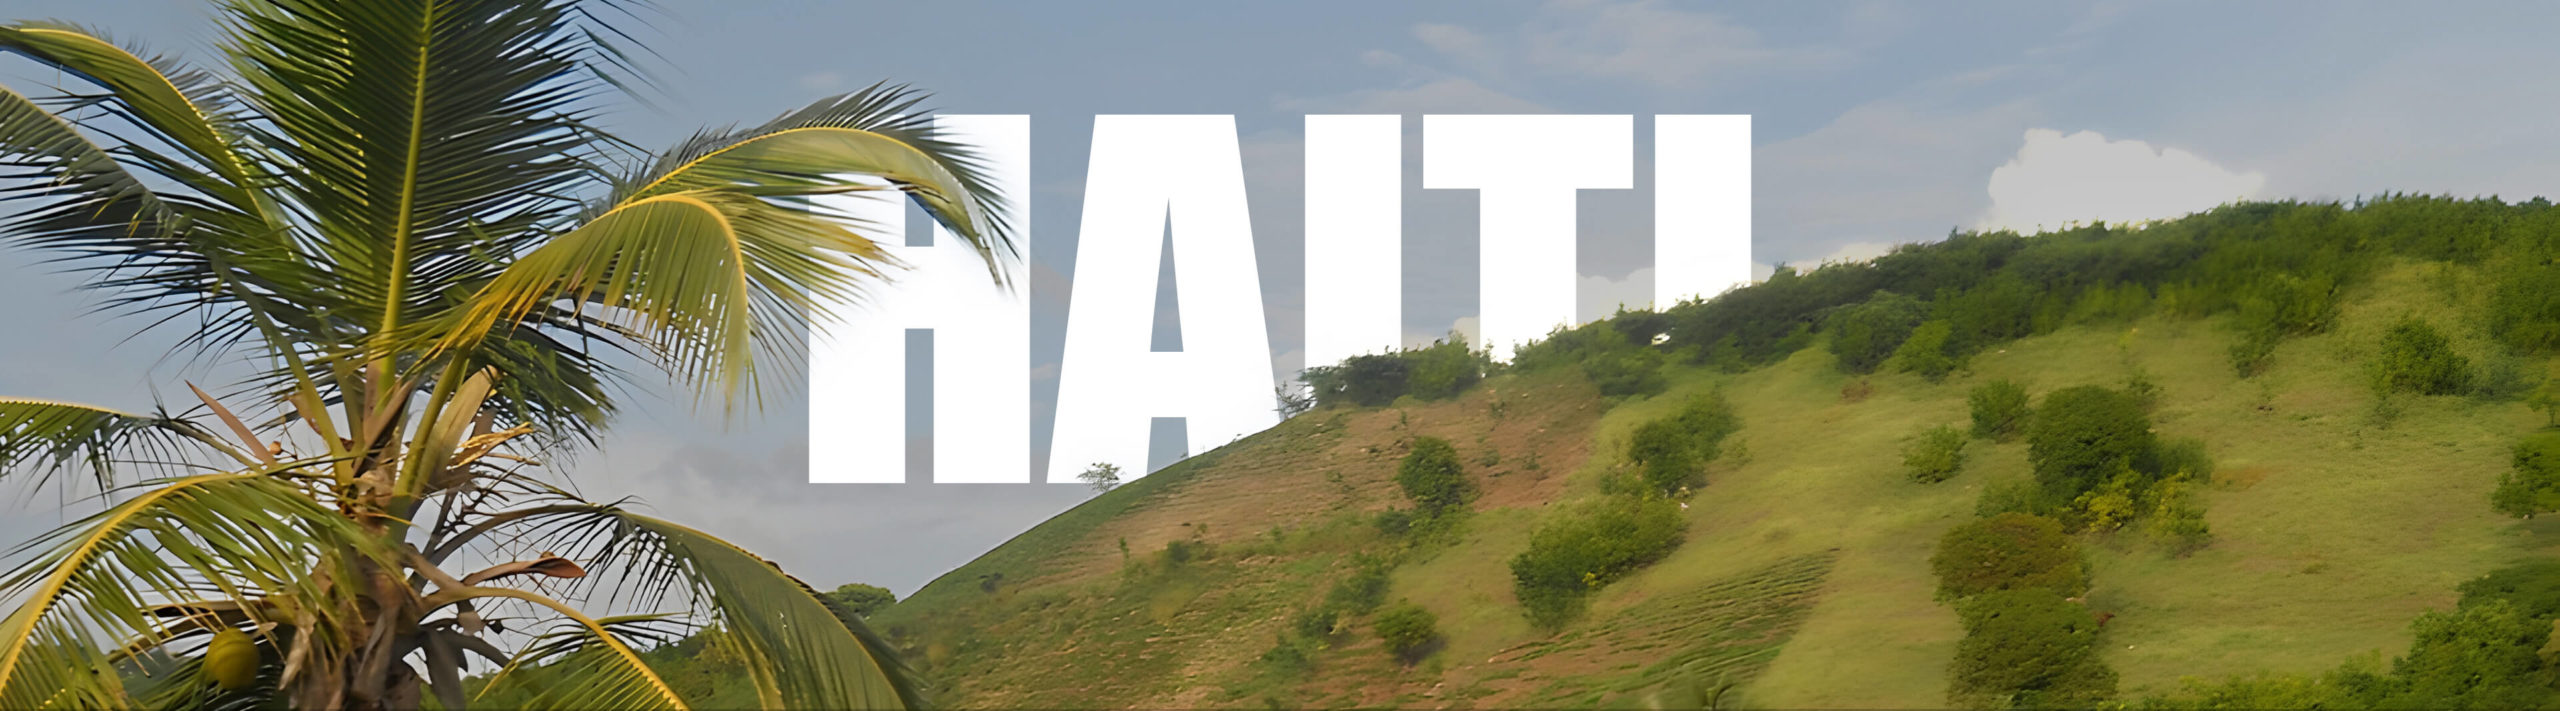 haiti-aml-cft-global-facility